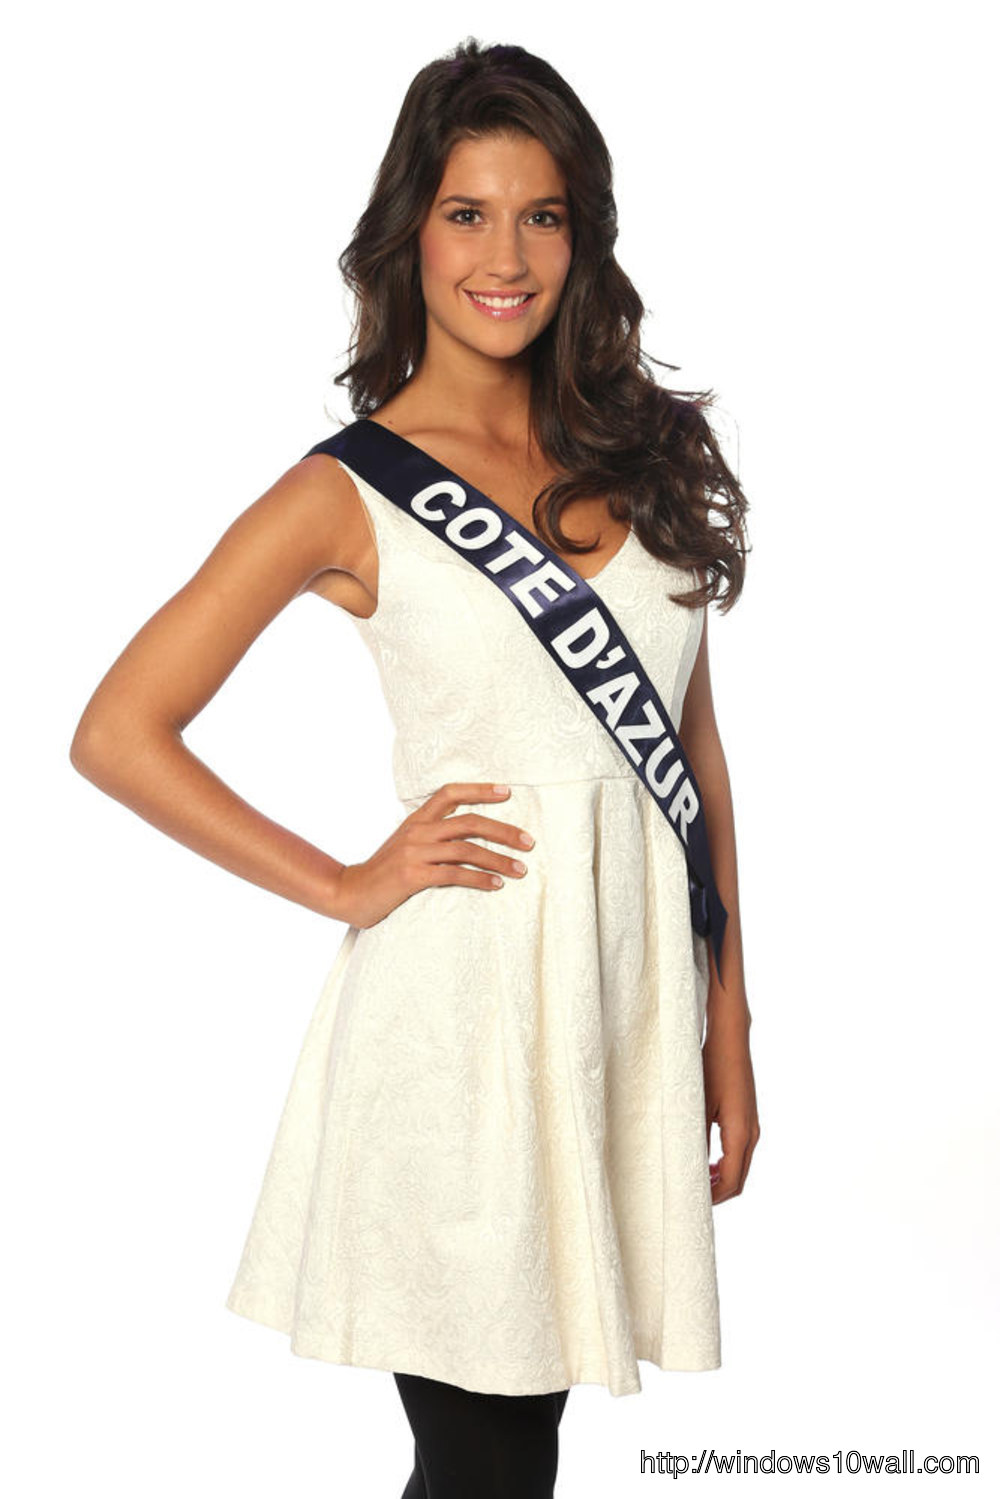 Miss Franche 2014 in white dress Wallpaper